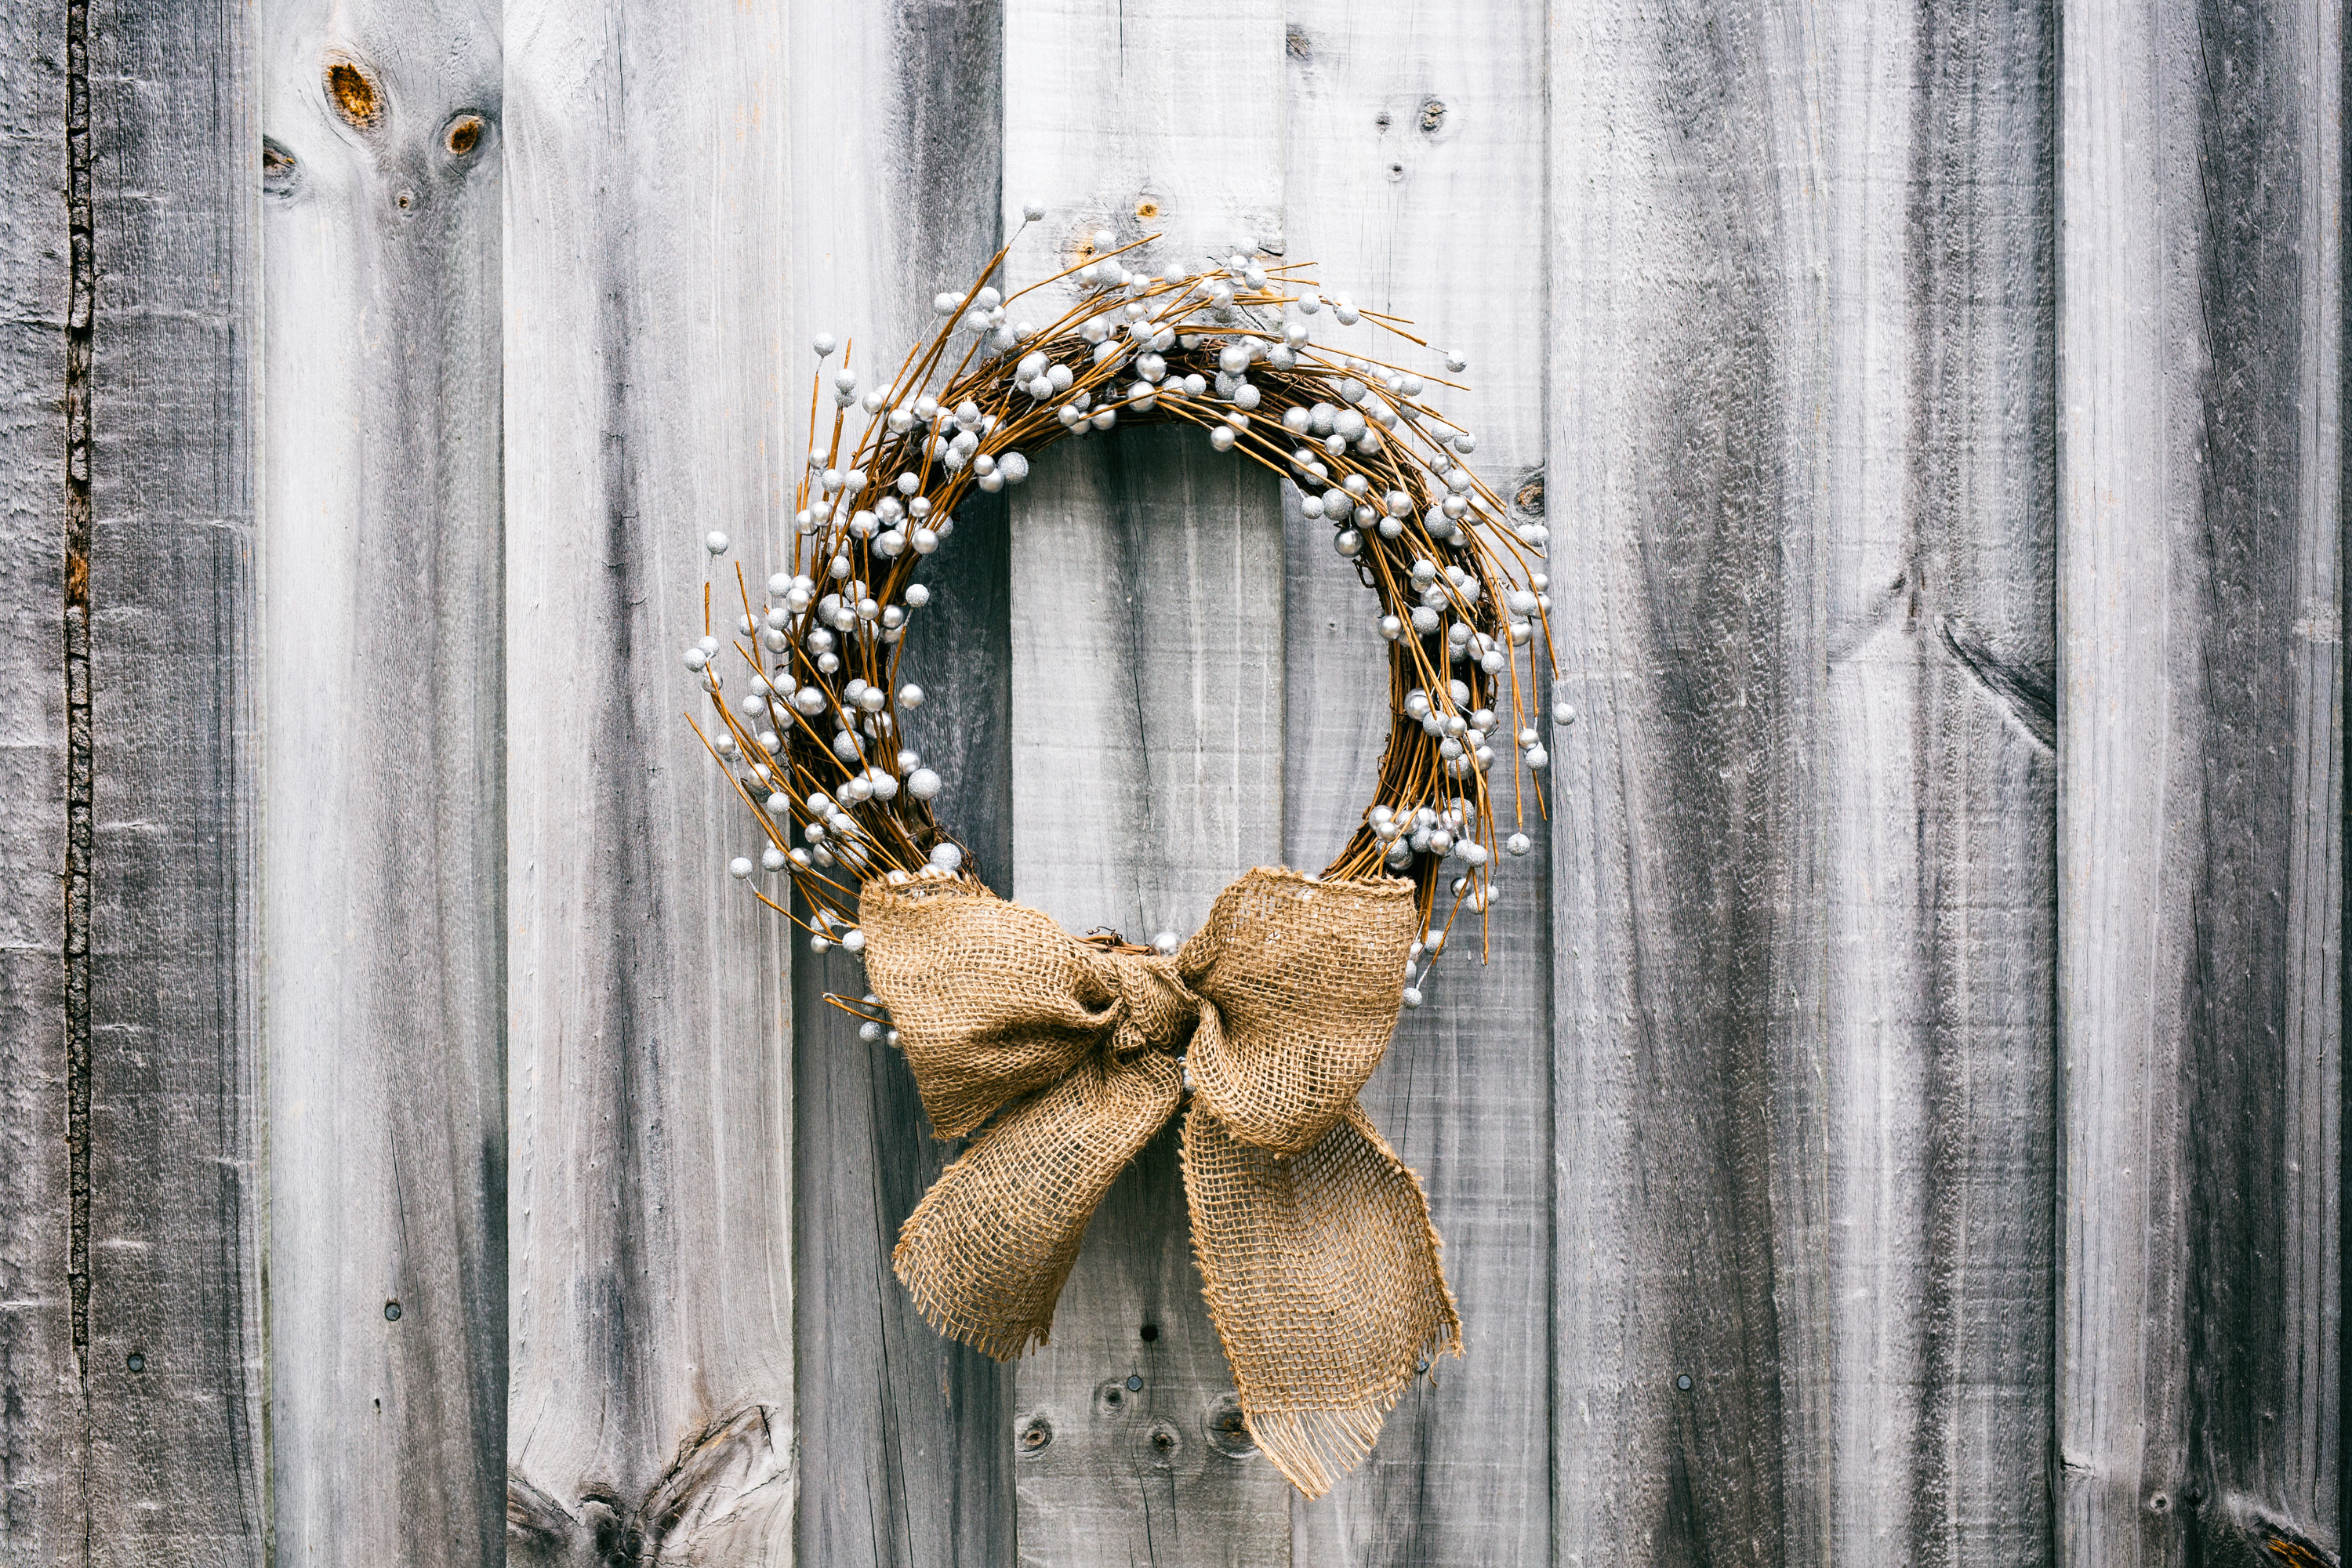 diy burlap wreaths | diy | burlap | wreaths | burlap wreath | diy wreath | diy projects | porch decor | diy porch decor 